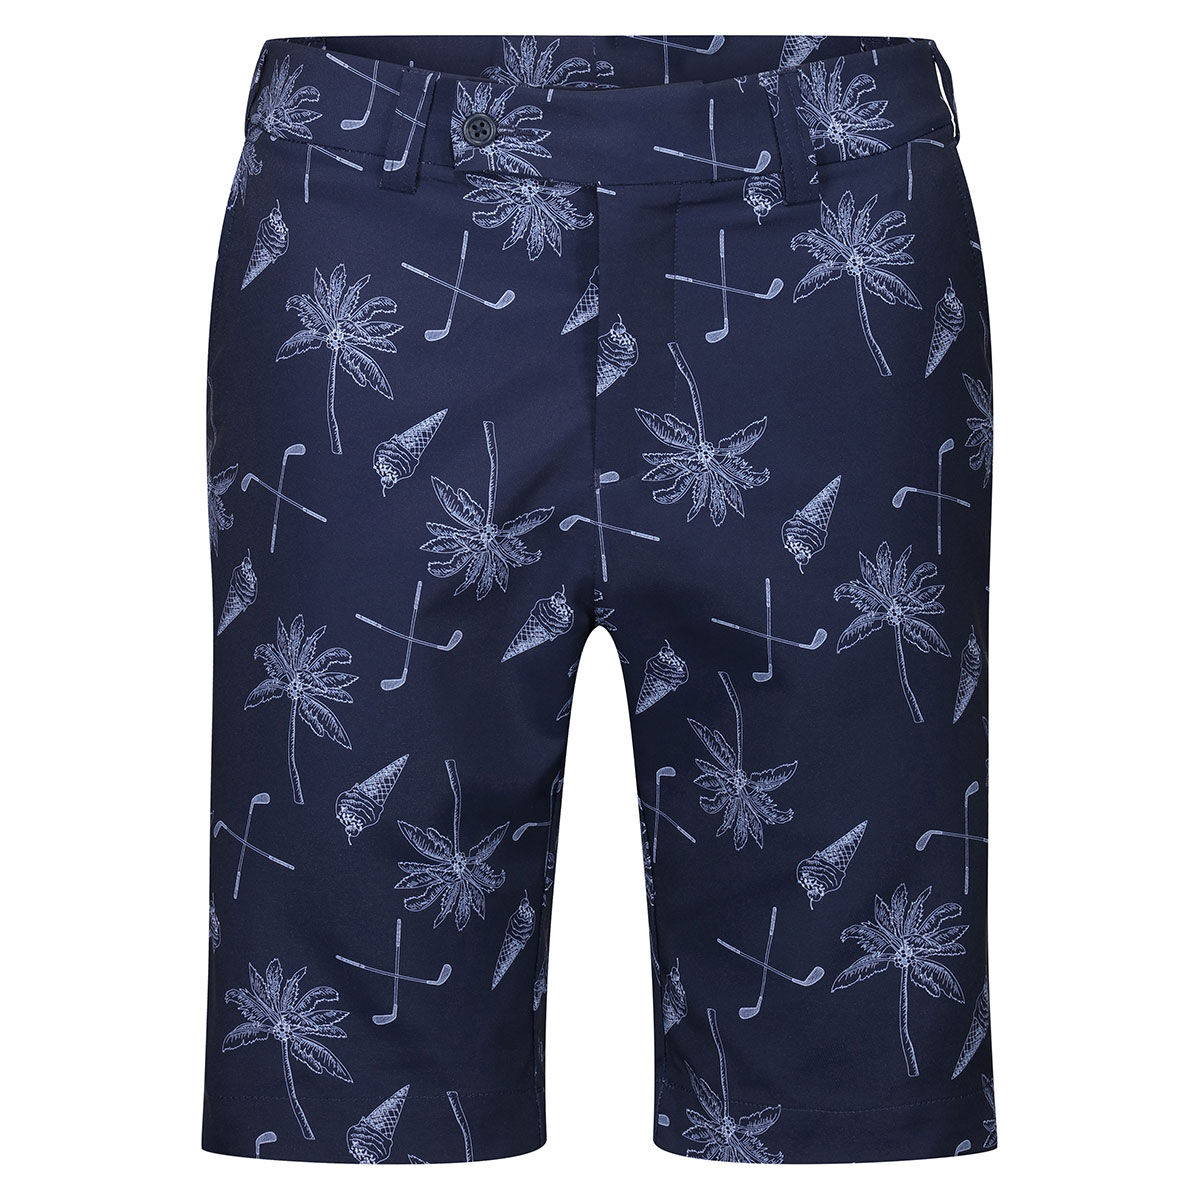 Capri hiking shorts with pockets - Black - Sz. 42-60 - Zizzifashion